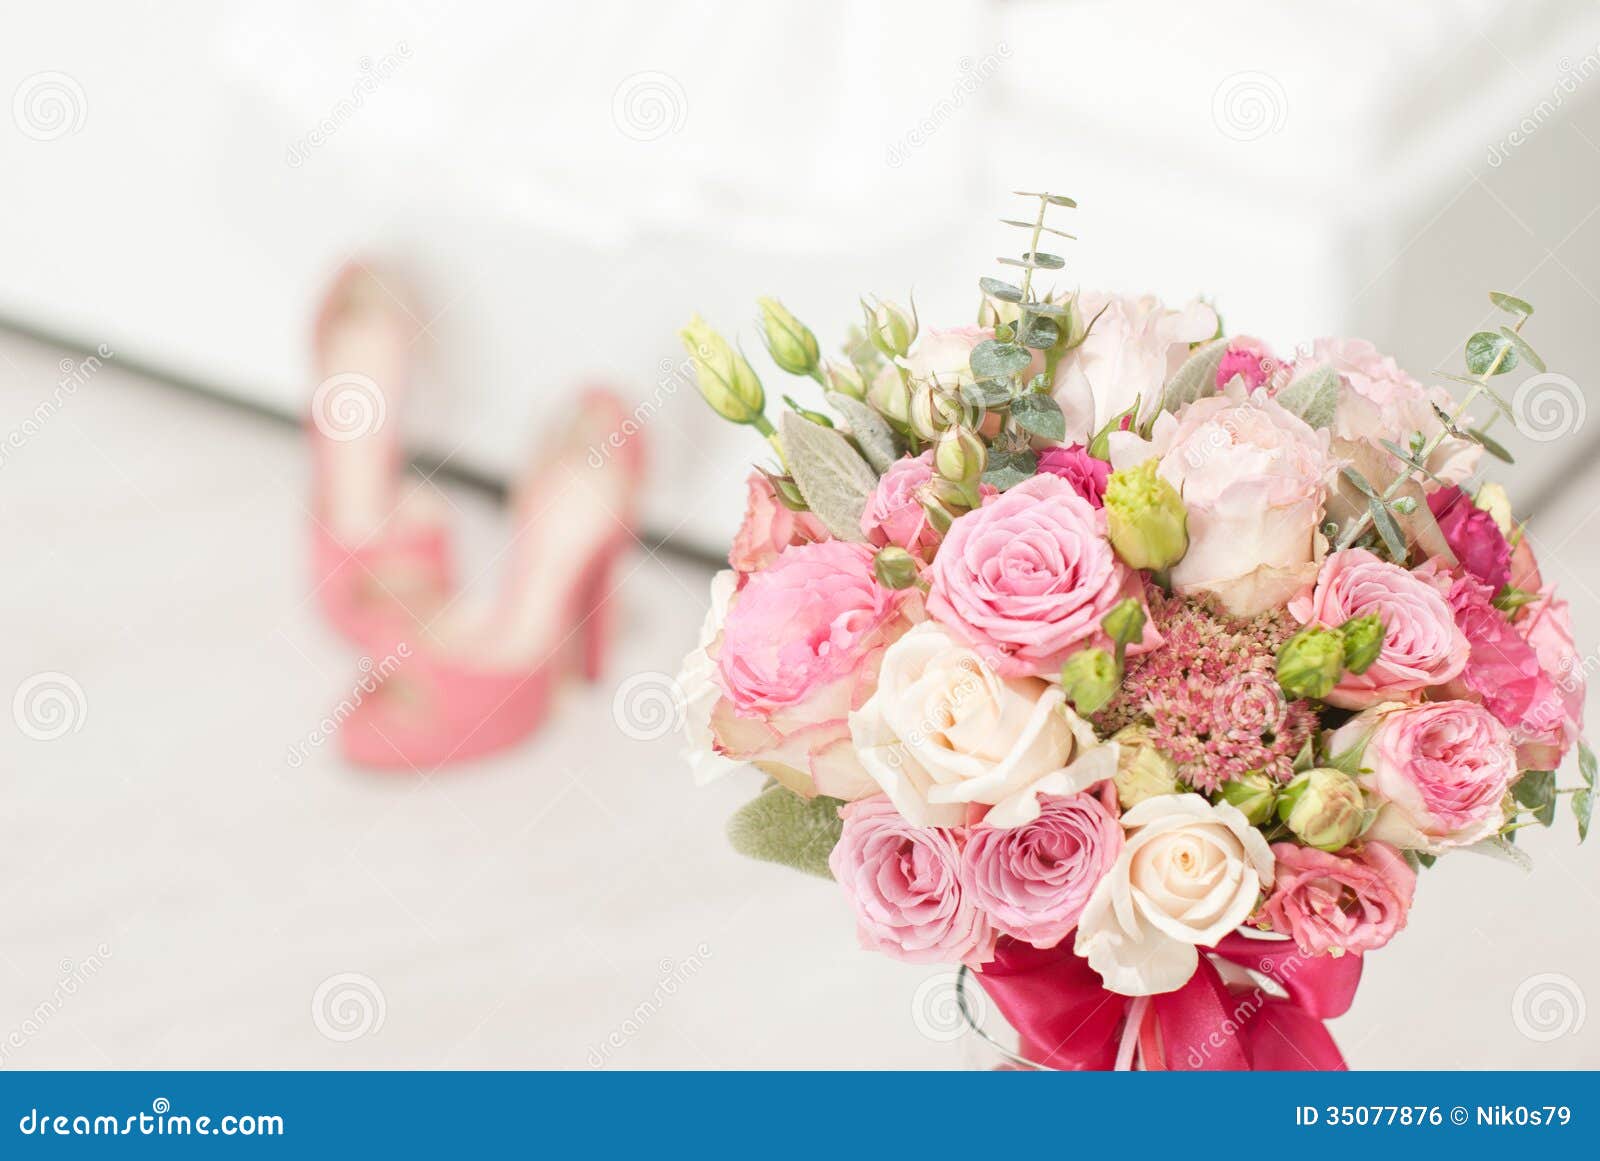 Wedding flowers backgrounds